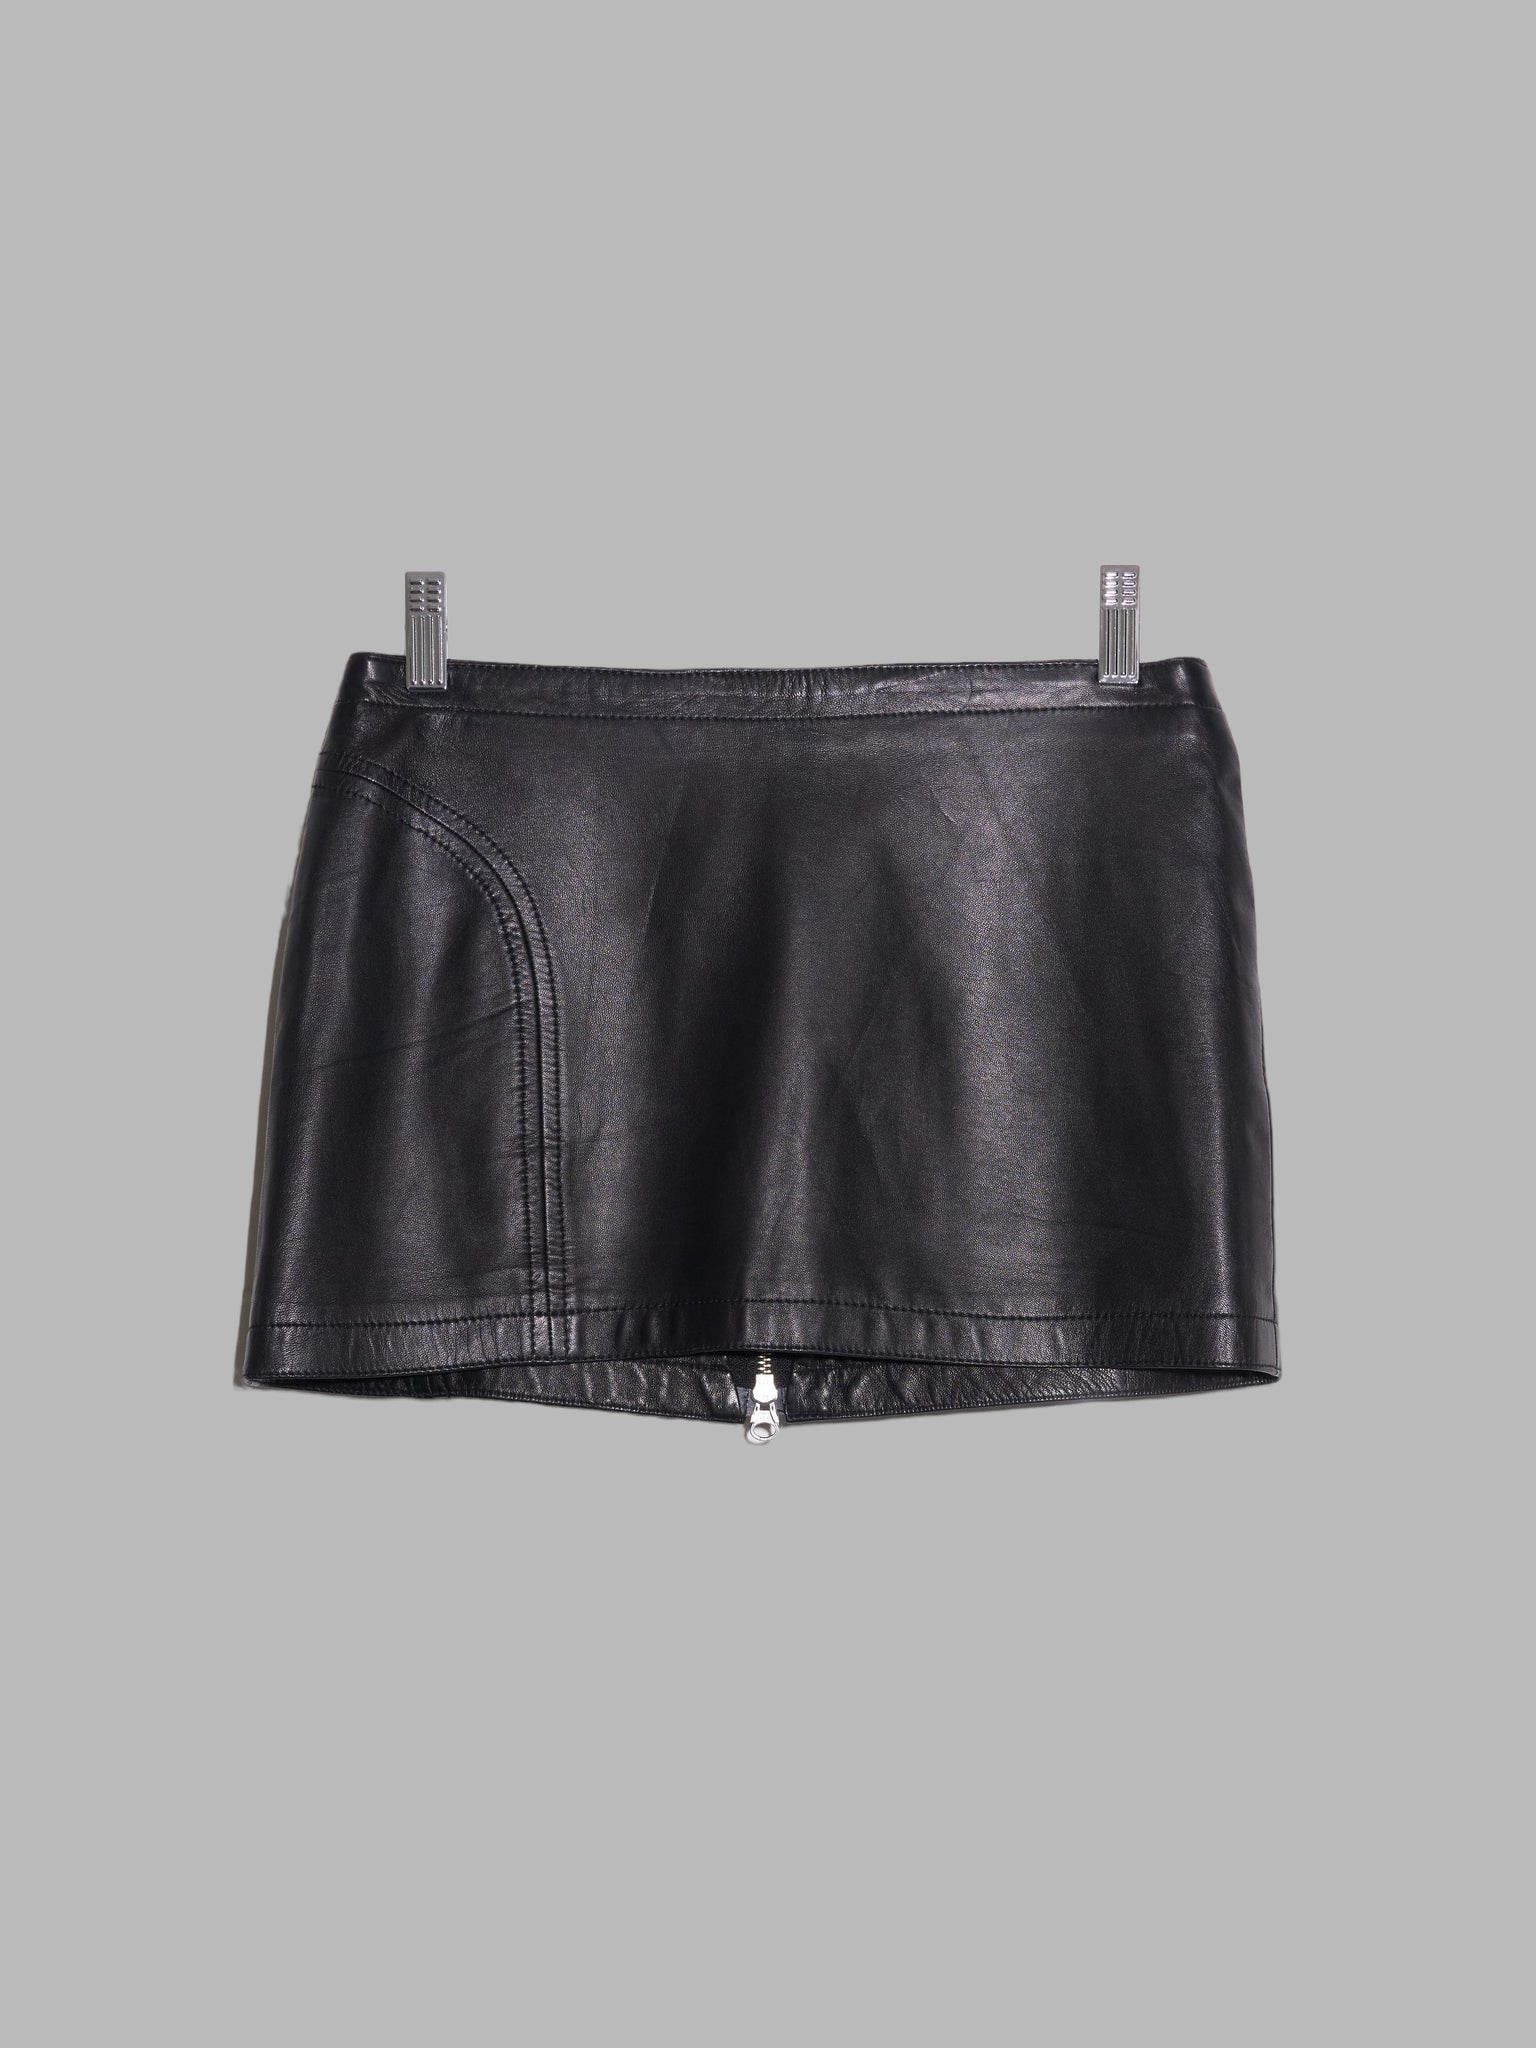 Dirk Bikkembergs 1990s 2000s black leather micro miniskirt - size 46